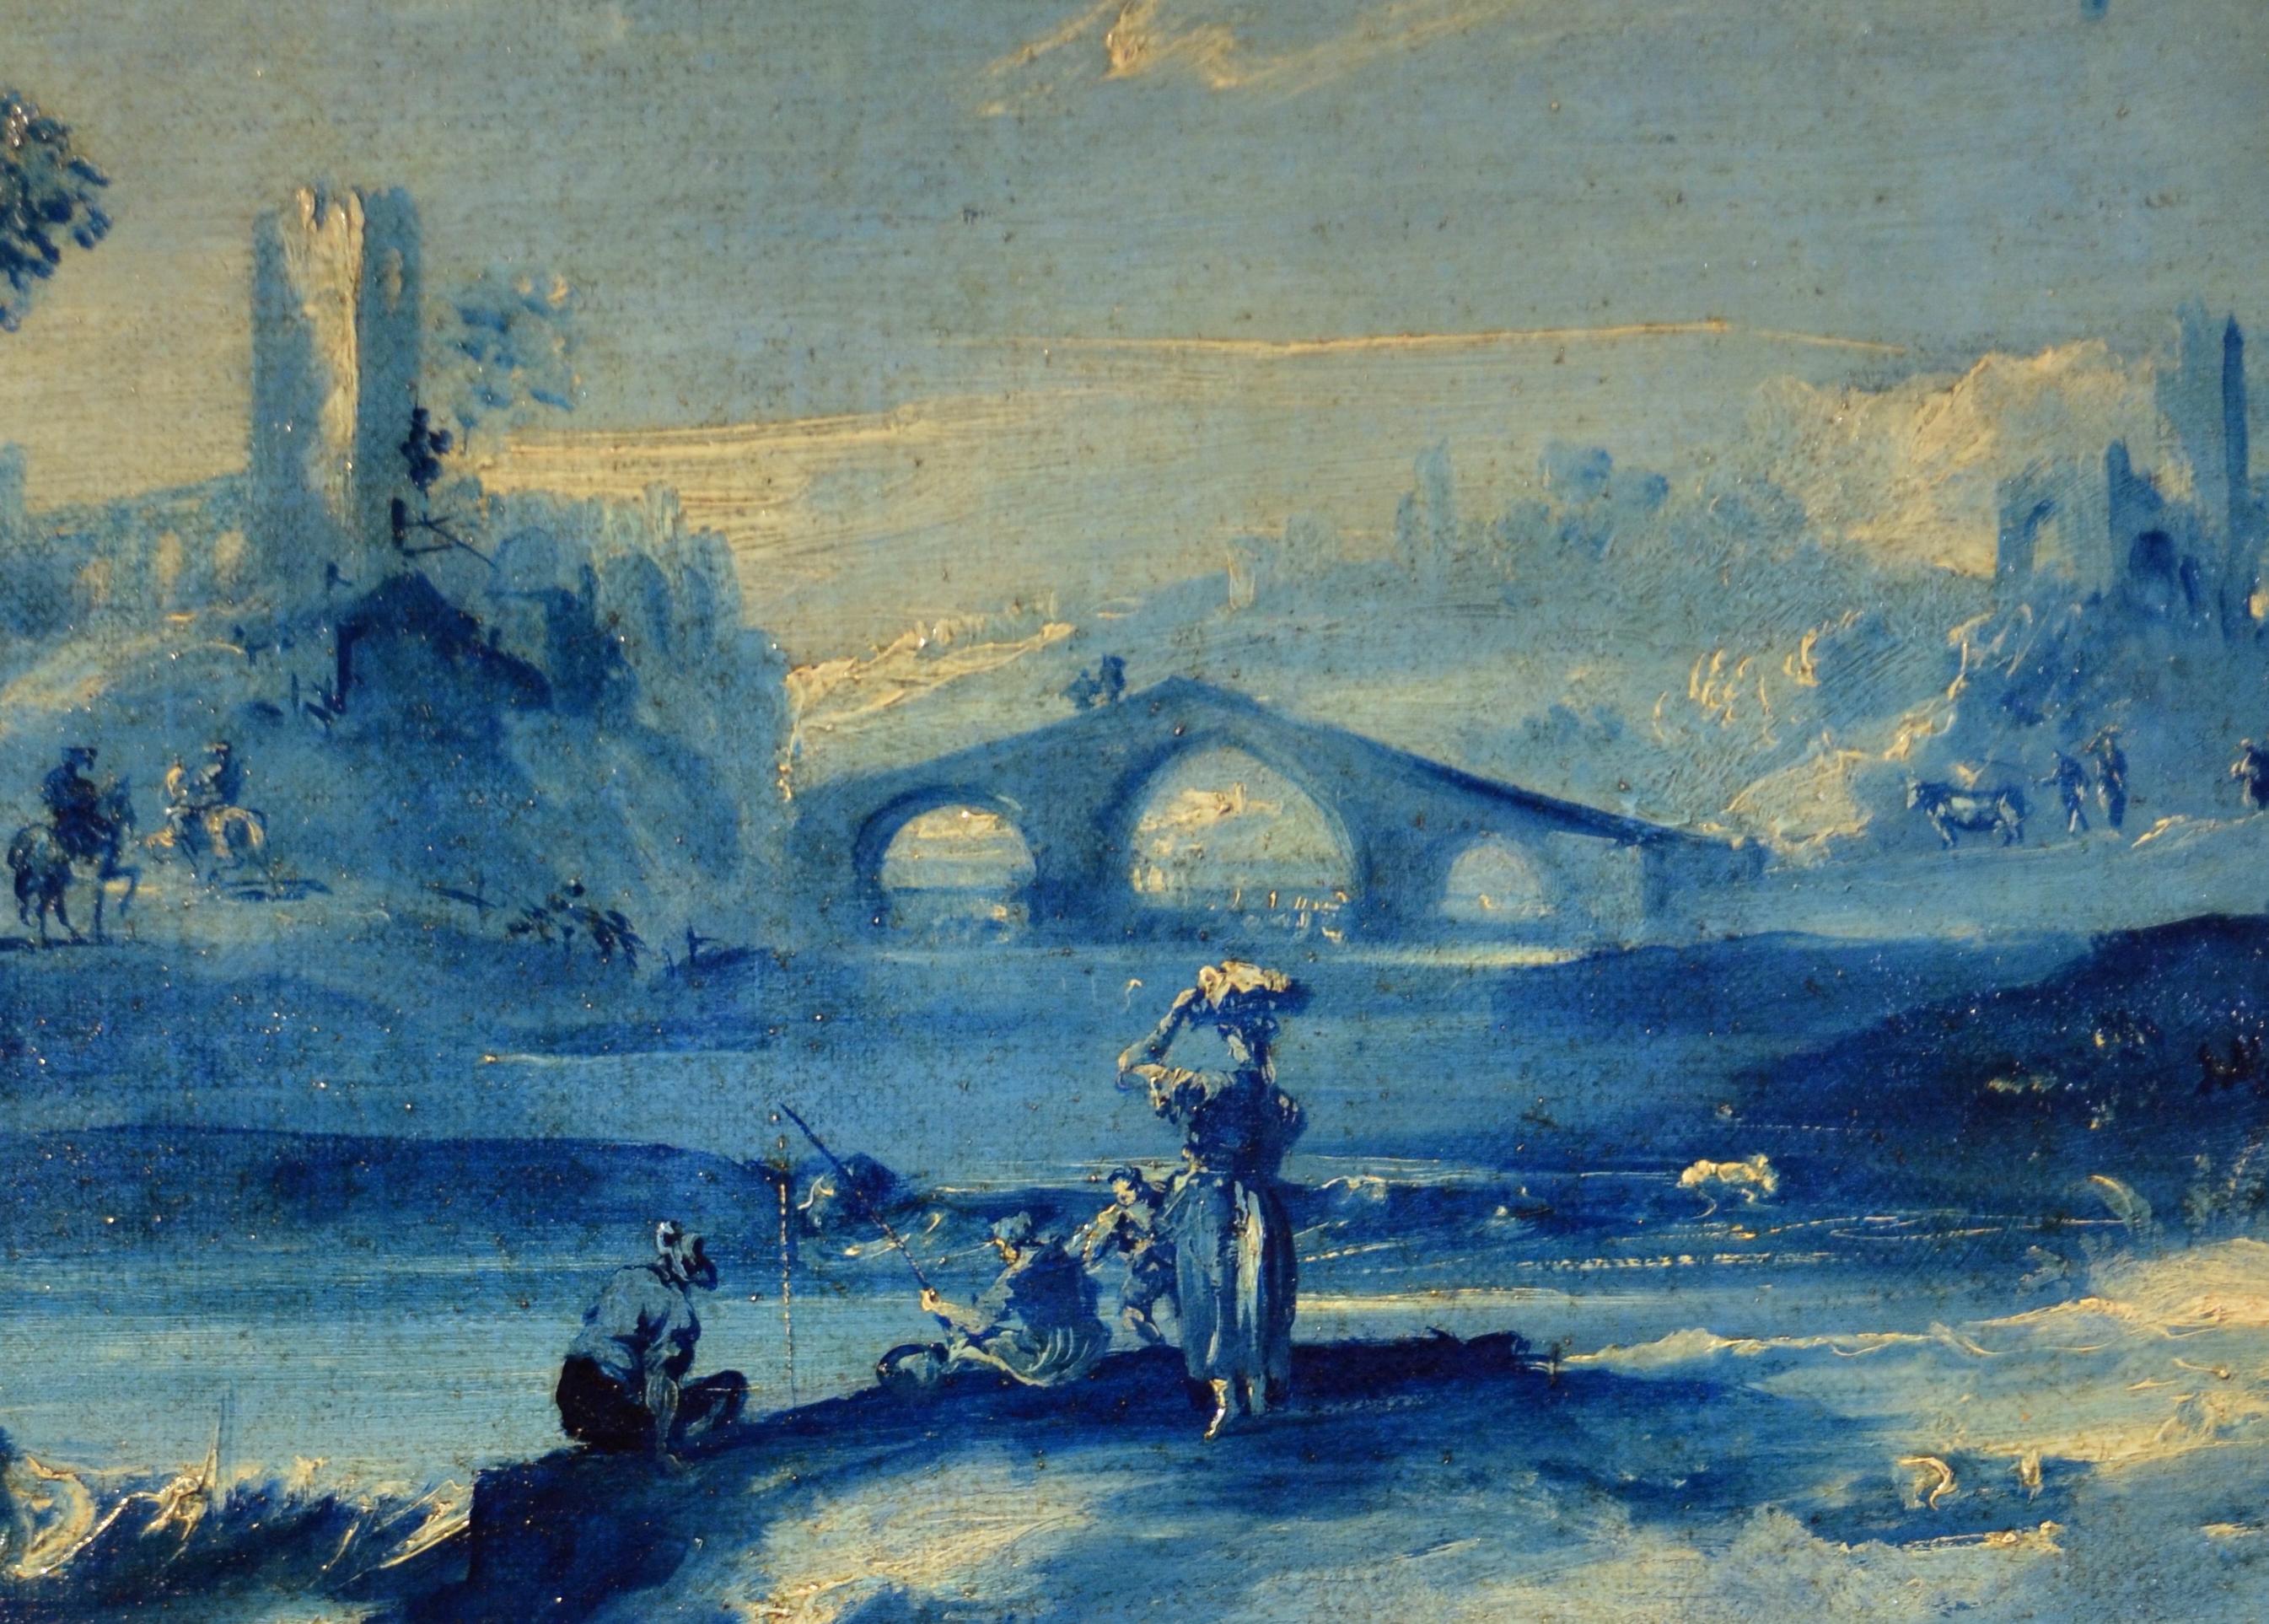 Paint Oil on canvas Pair Landscape Wood See Lake Venezia Italy Baroque Ricci Art 10